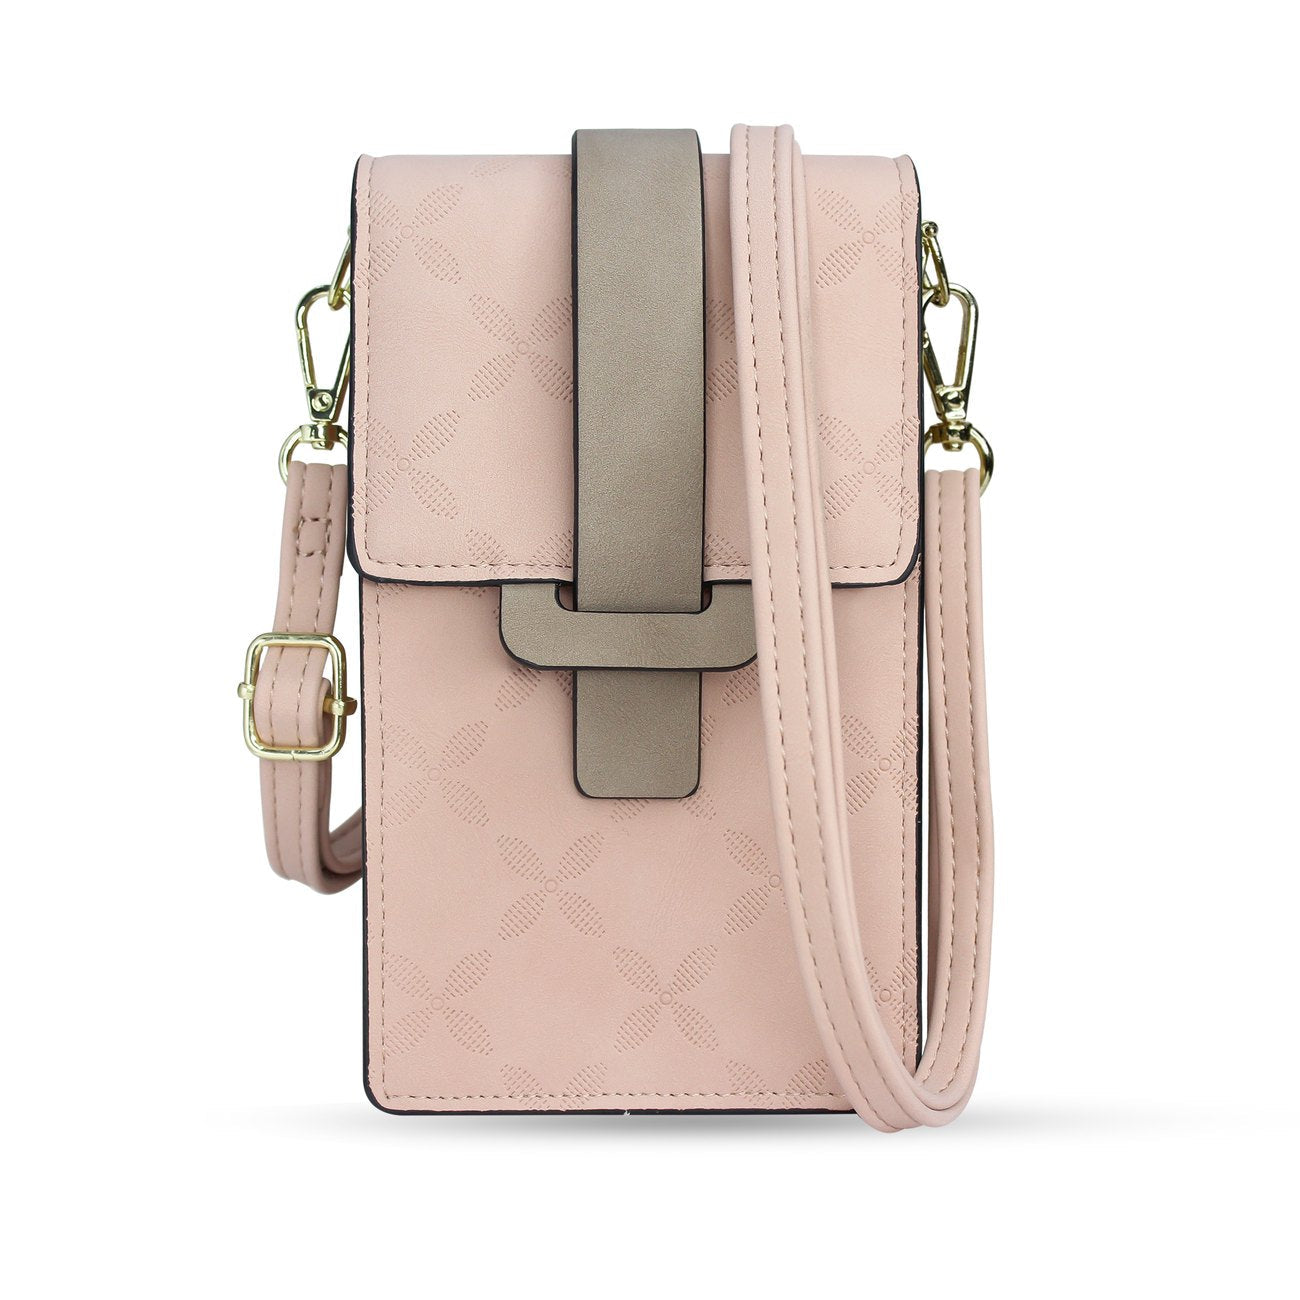 Fancy Bag Case Handmade Pouch High Quality Bag Smartphone Purse with Shoulder Strap Wallet Pink (Model 1)